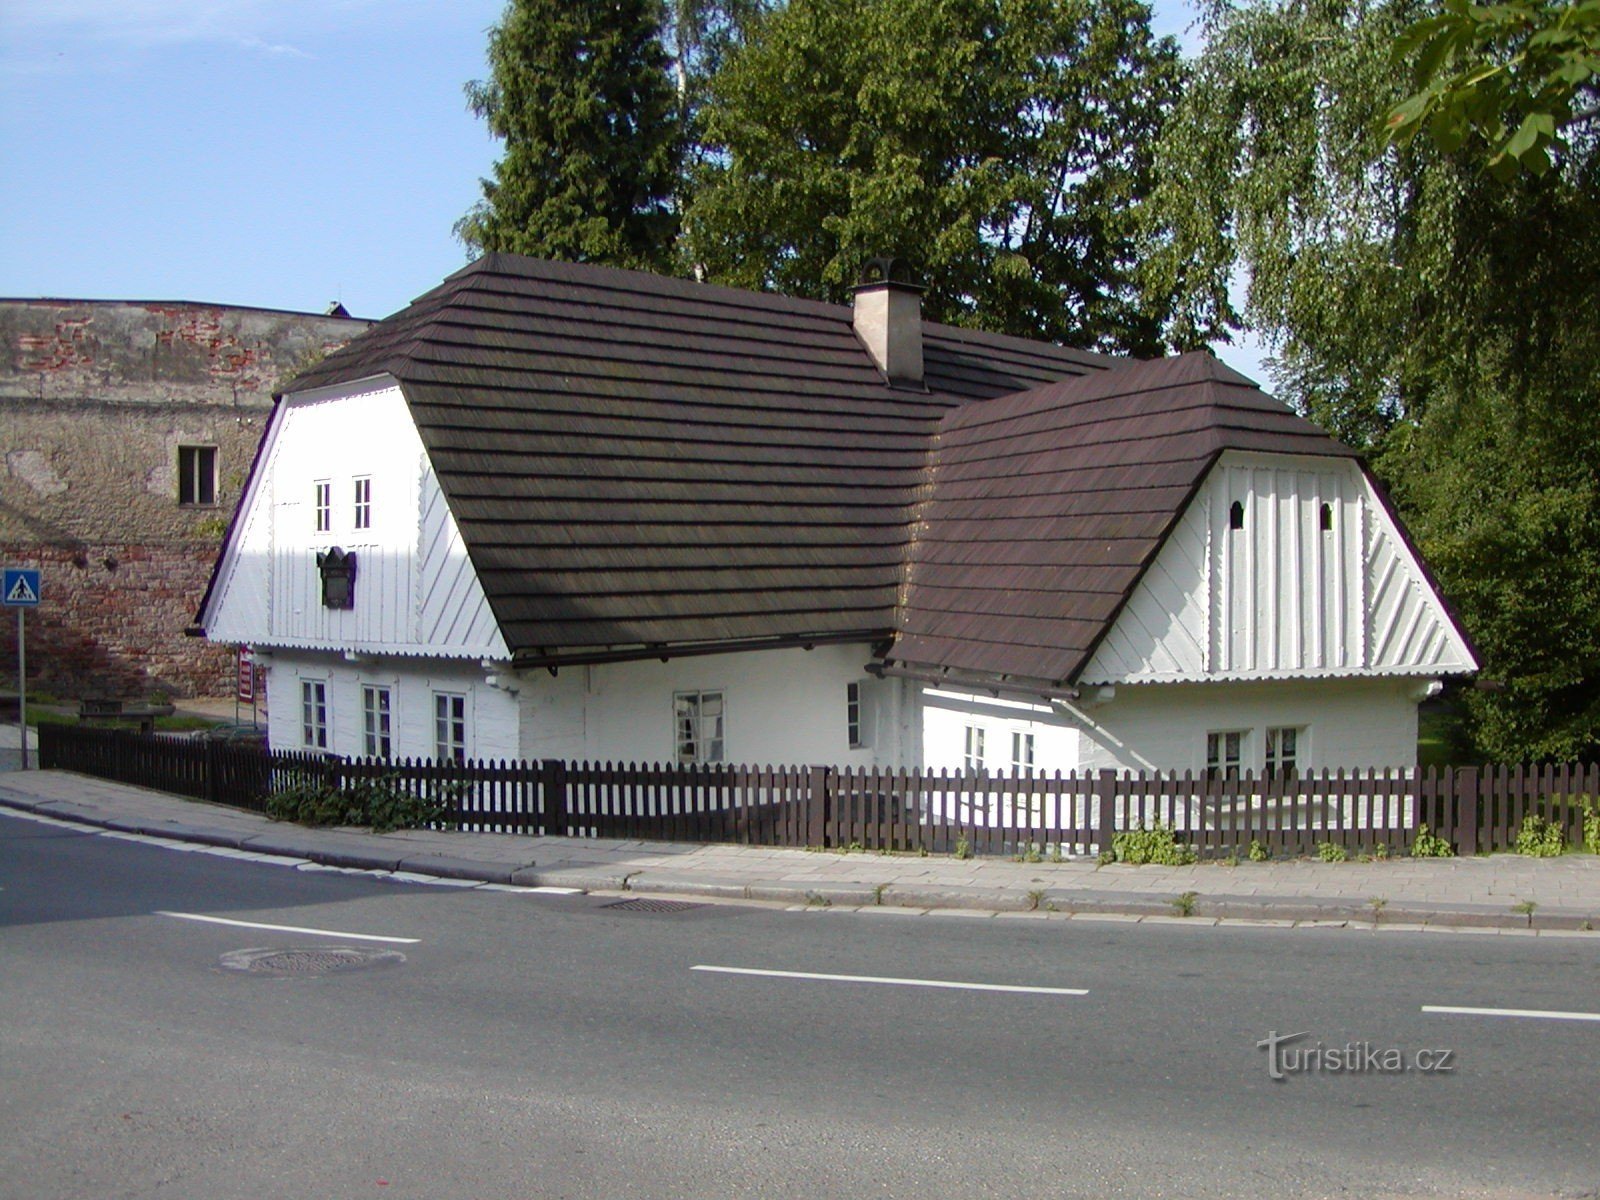 Hronov - the birthplace of Alois Jirásek